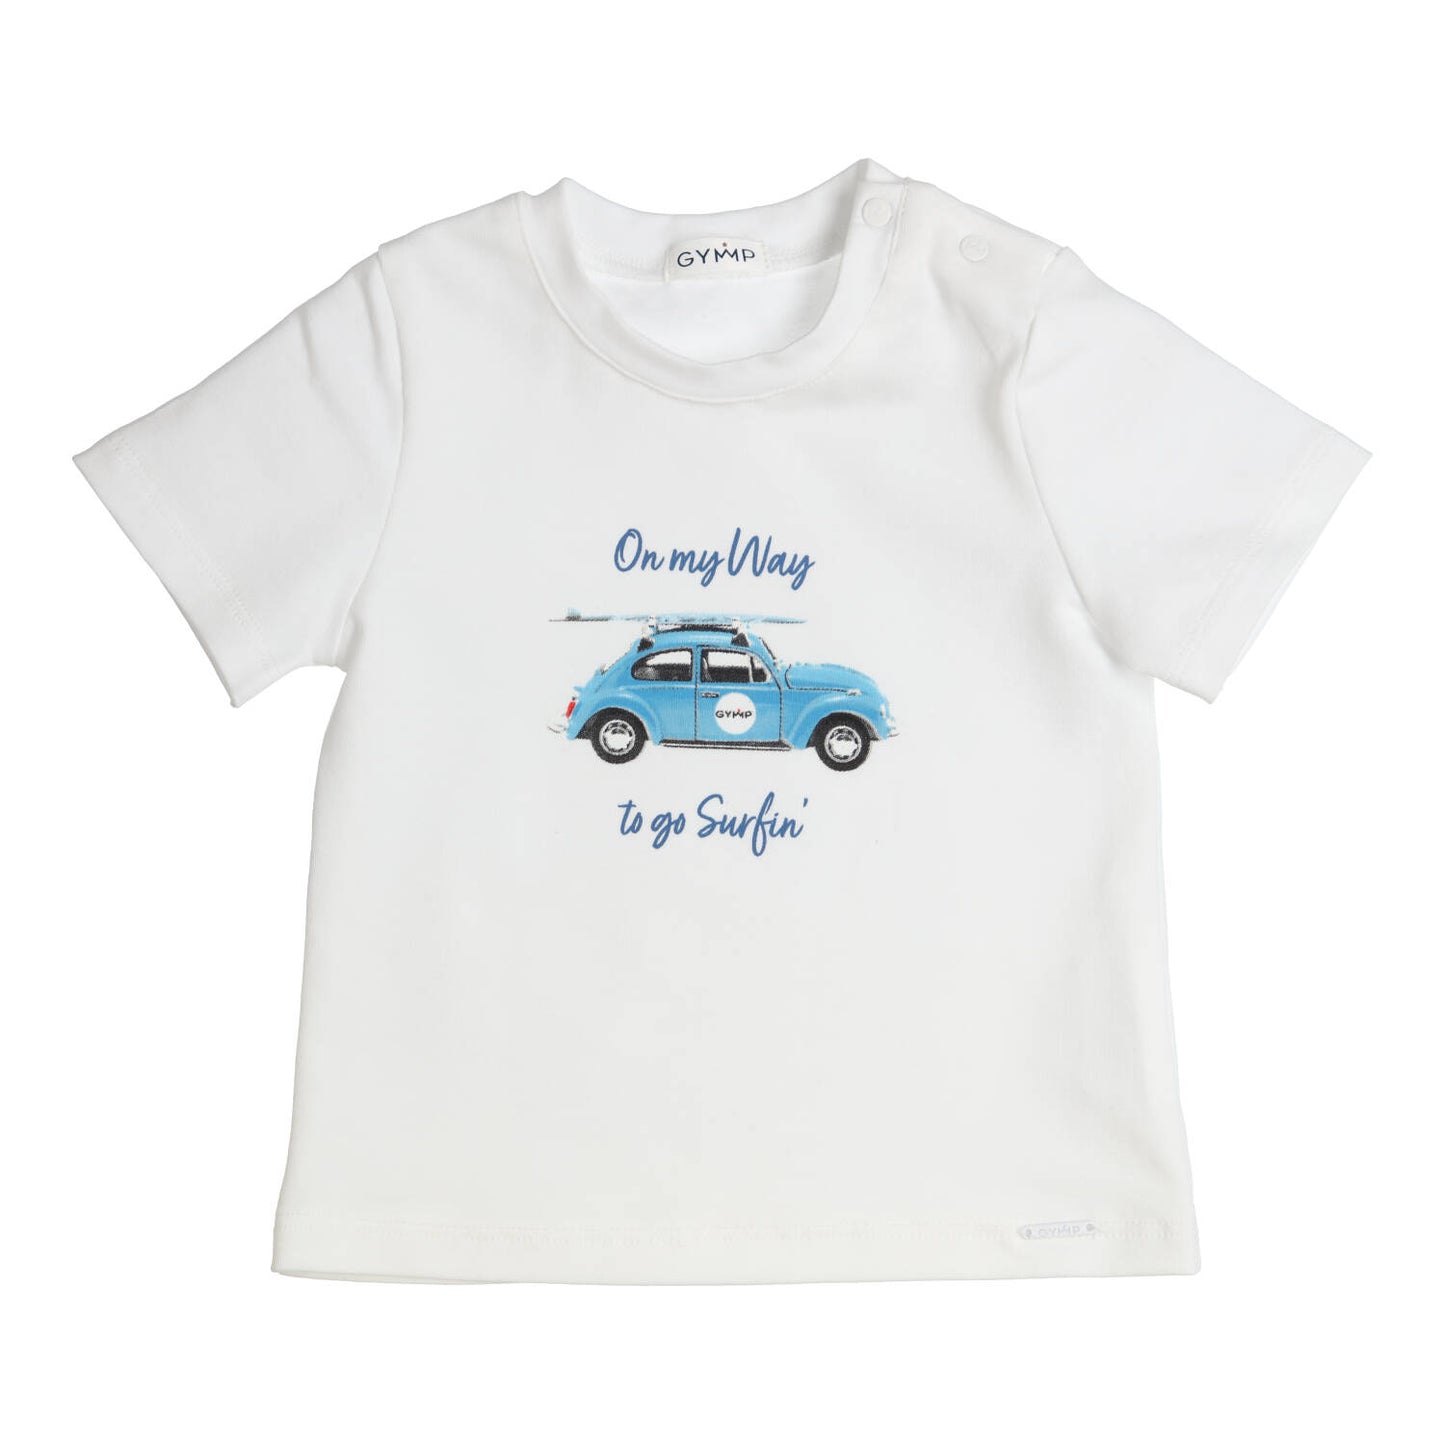 || Gymp || T-shirt met auto print